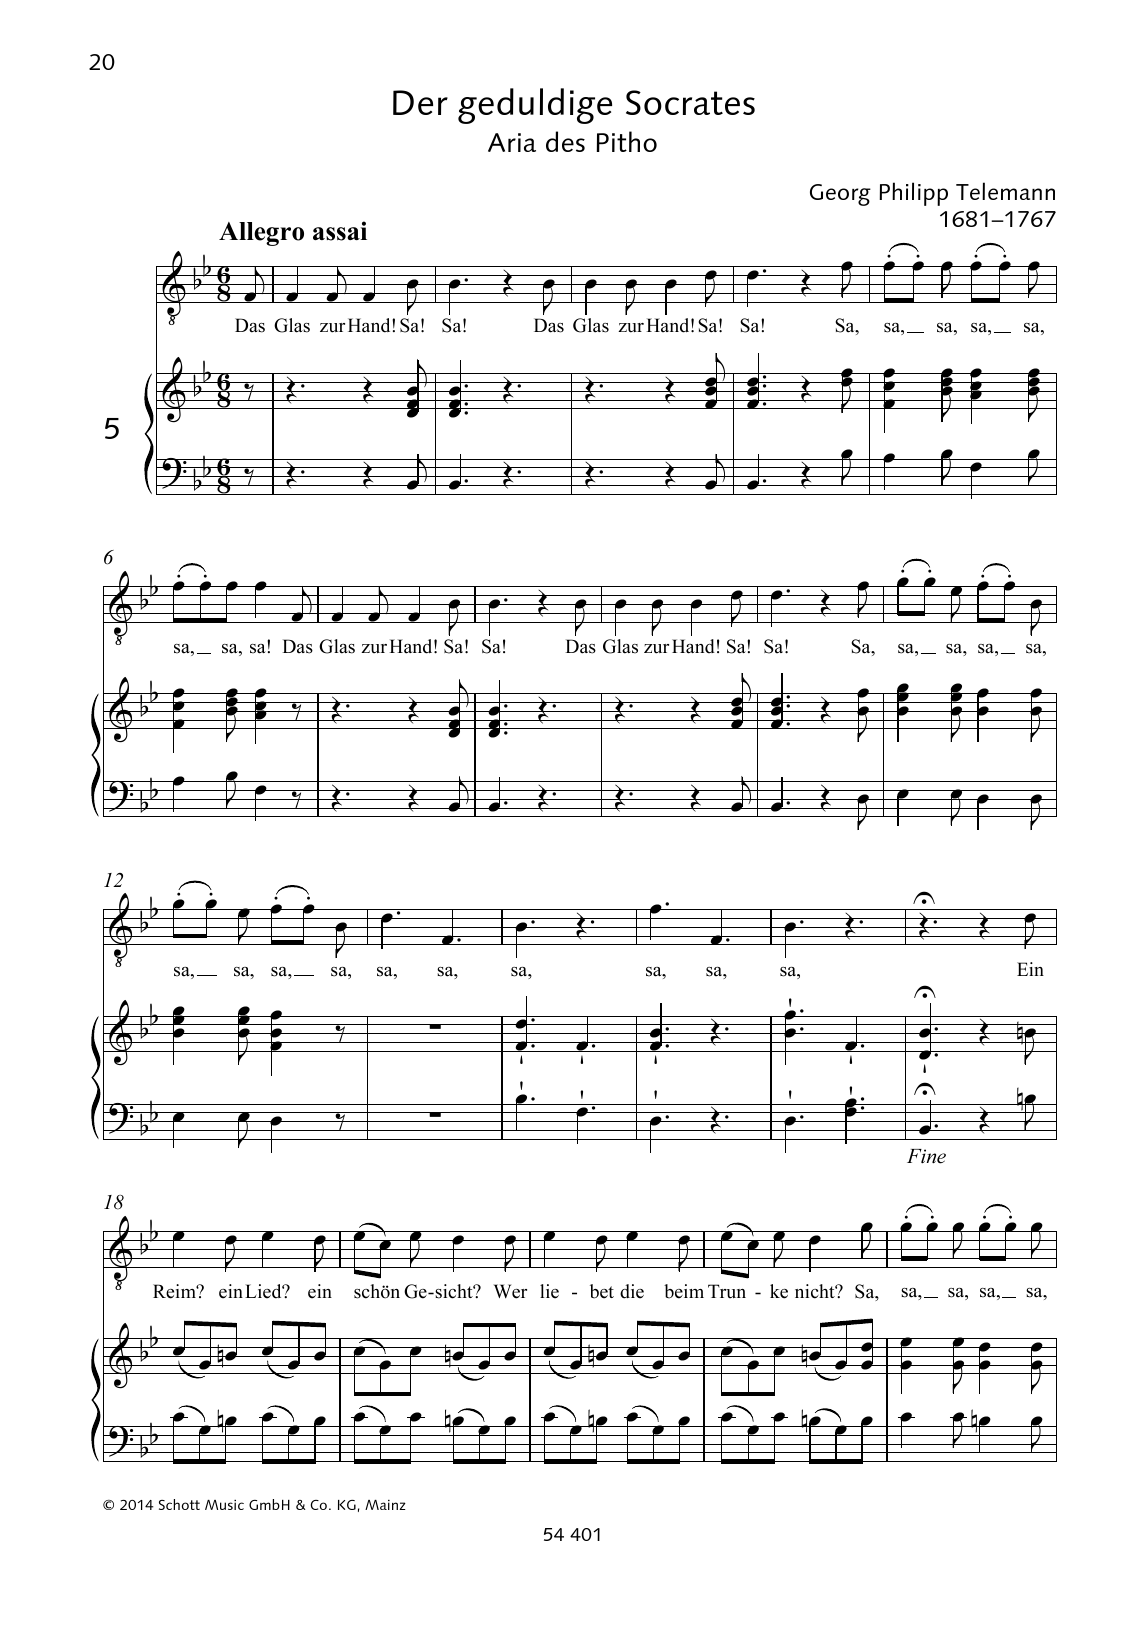 Georg Philipp Telemann Das Glas zur Hand sheet music notes and chords arranged for Piano & Vocal